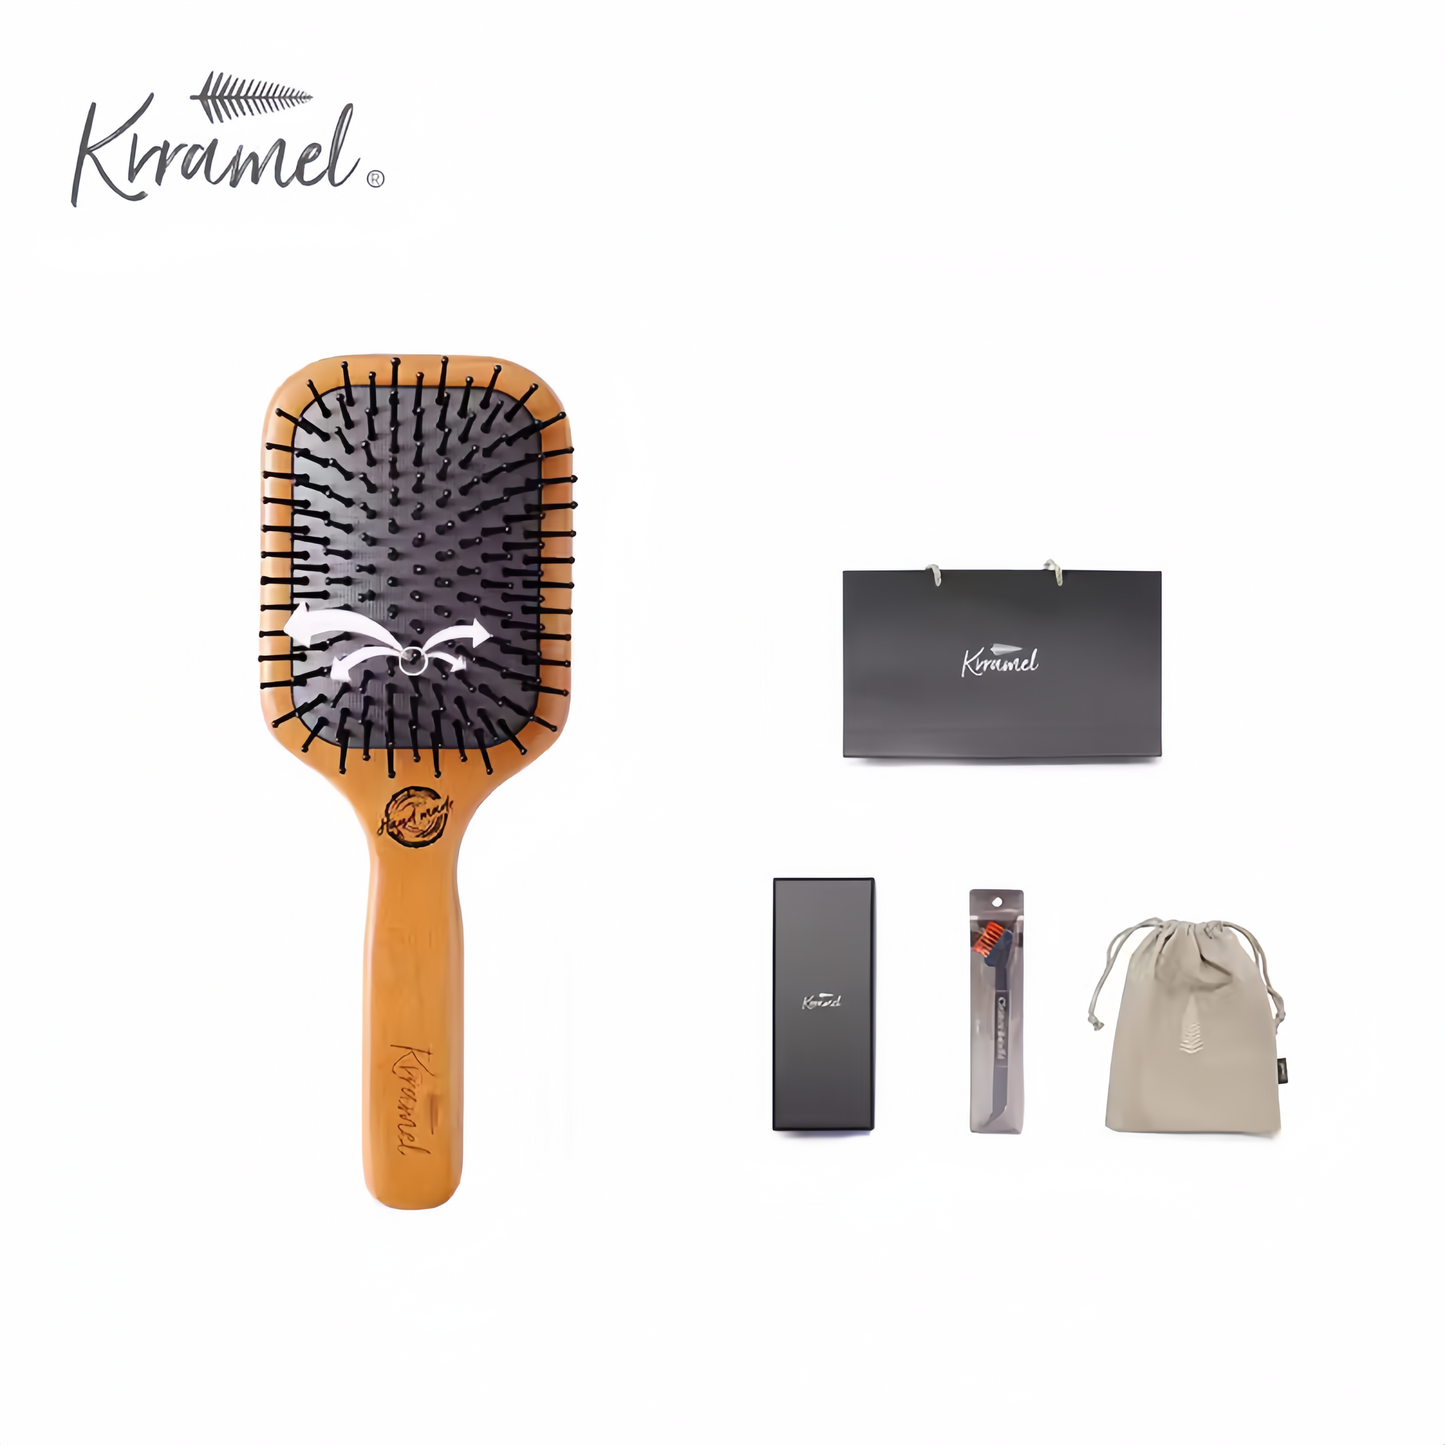 KRRAMEL Hair Massage comb Paddle Brush premium quality fine wood FREE Gift Box & bag cover